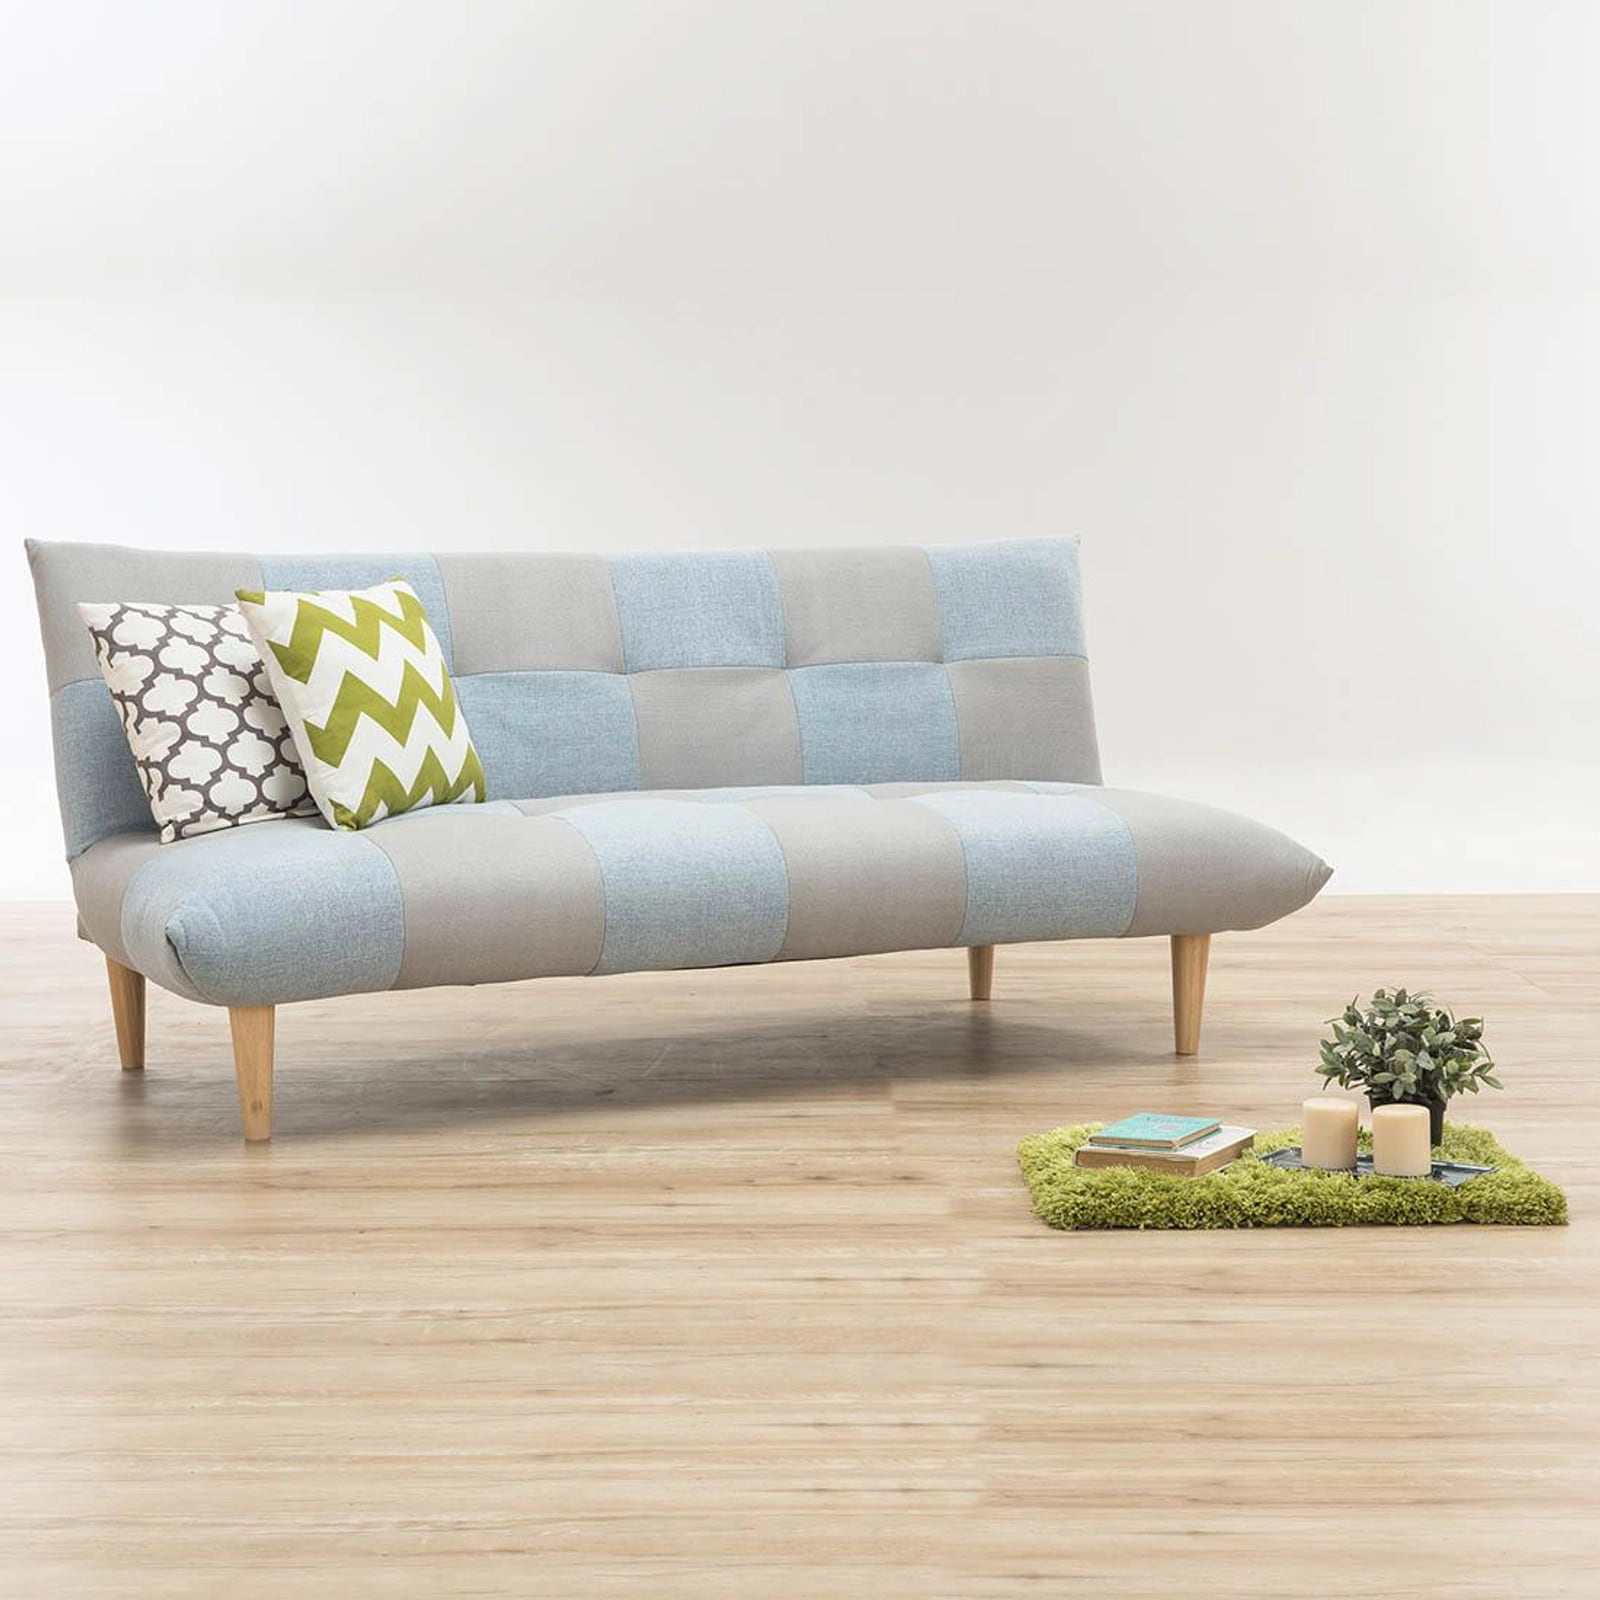 fabric futon, with sleek wood legs, cushions, wood flooring, white walls, classic vibe, minimalistic look